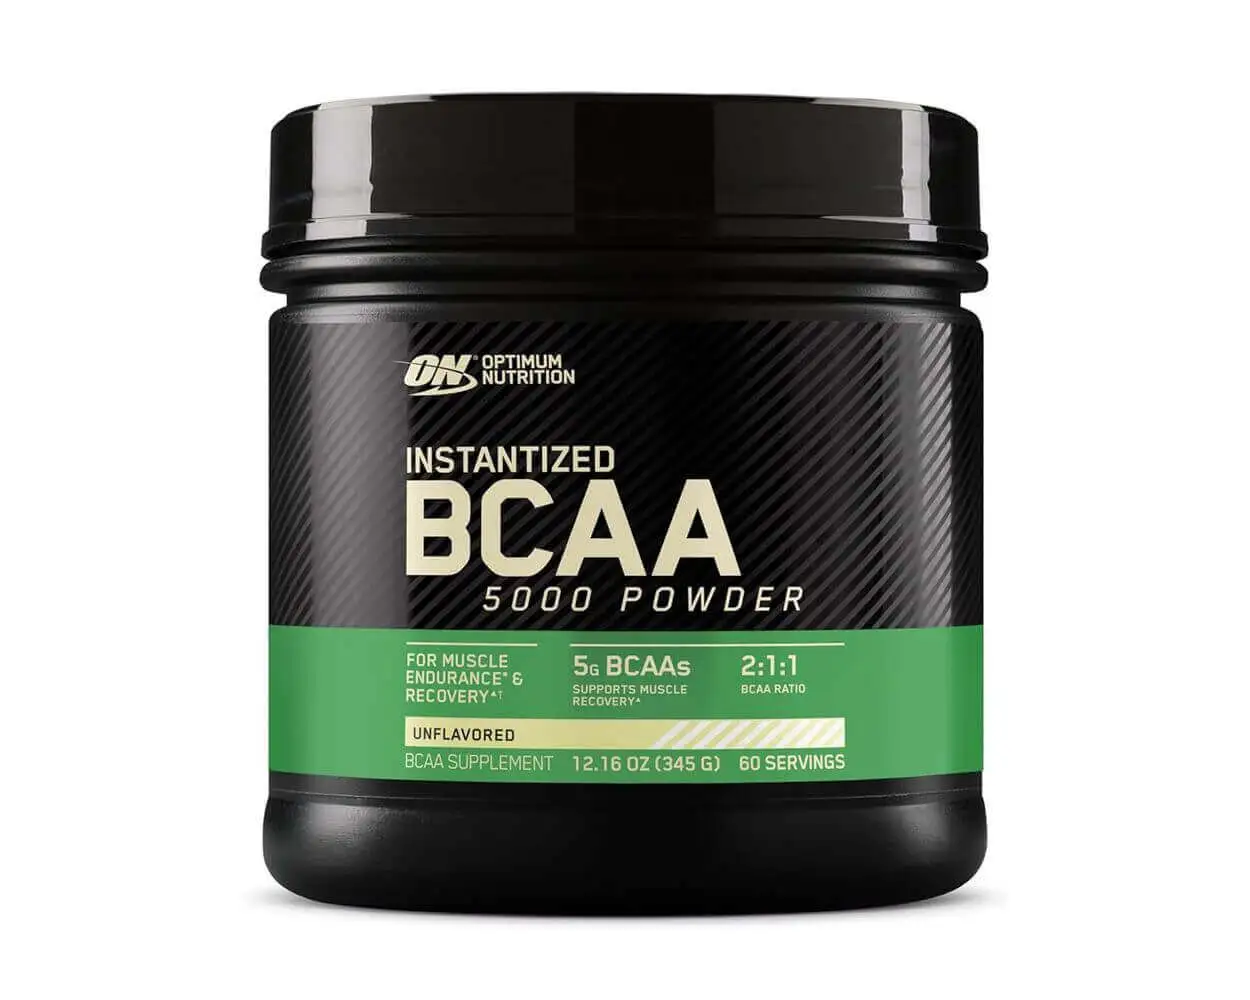 Optimum Nutrition Instantized bcaa 5000 powder 60 servings